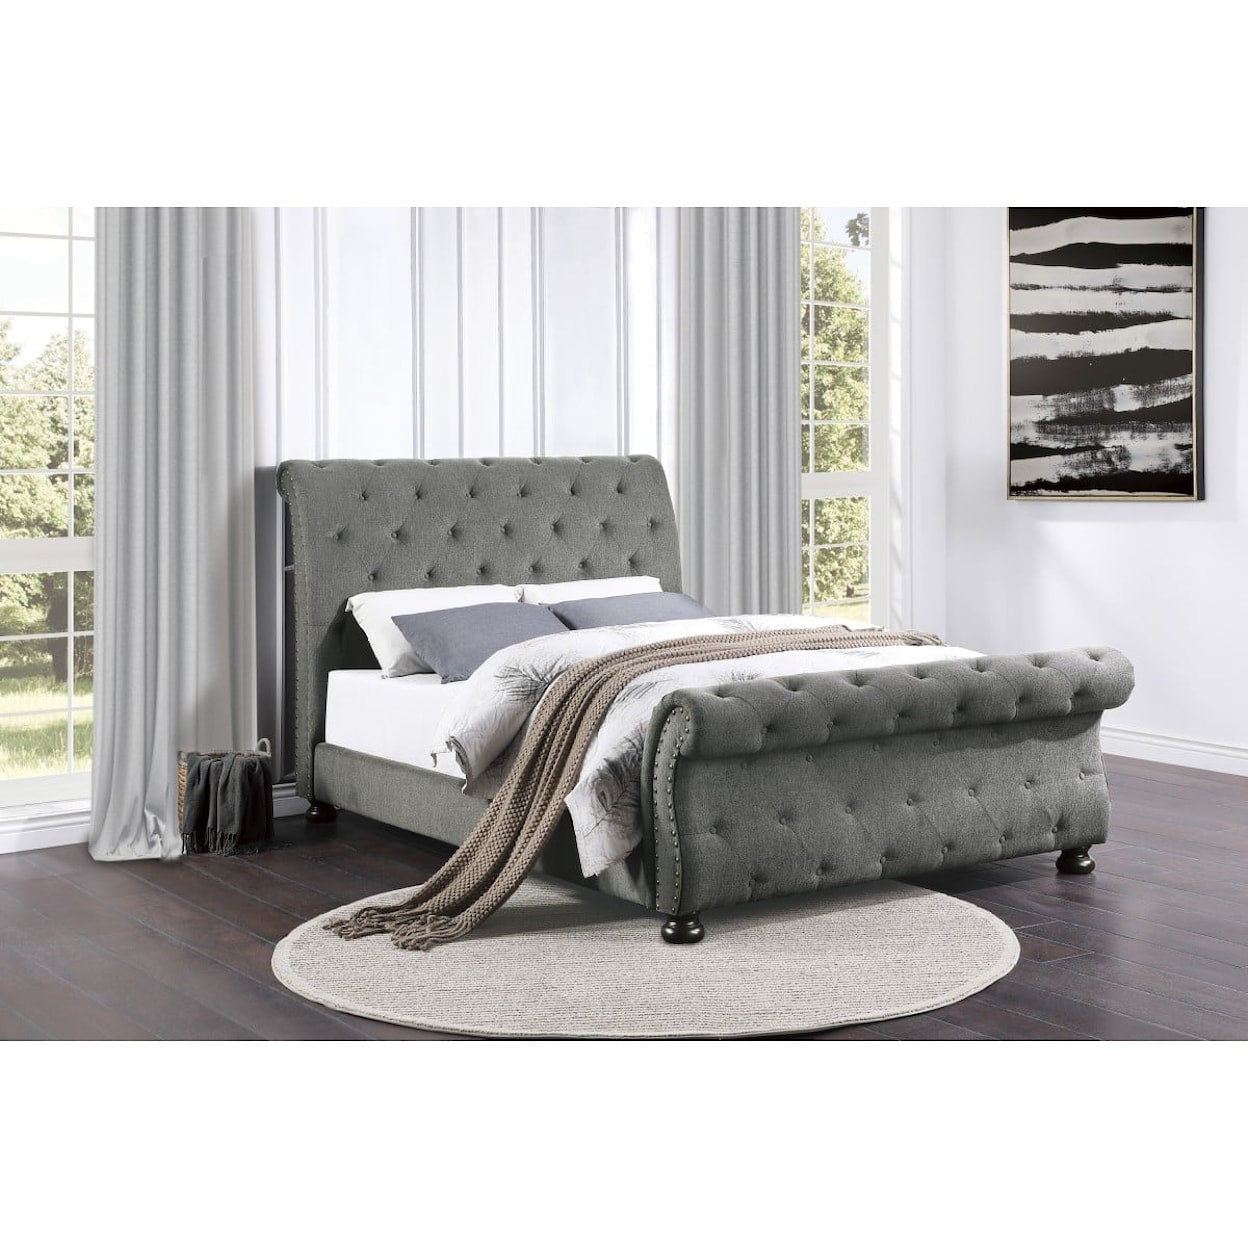 Homelegance Furniture Crofton Full Bed